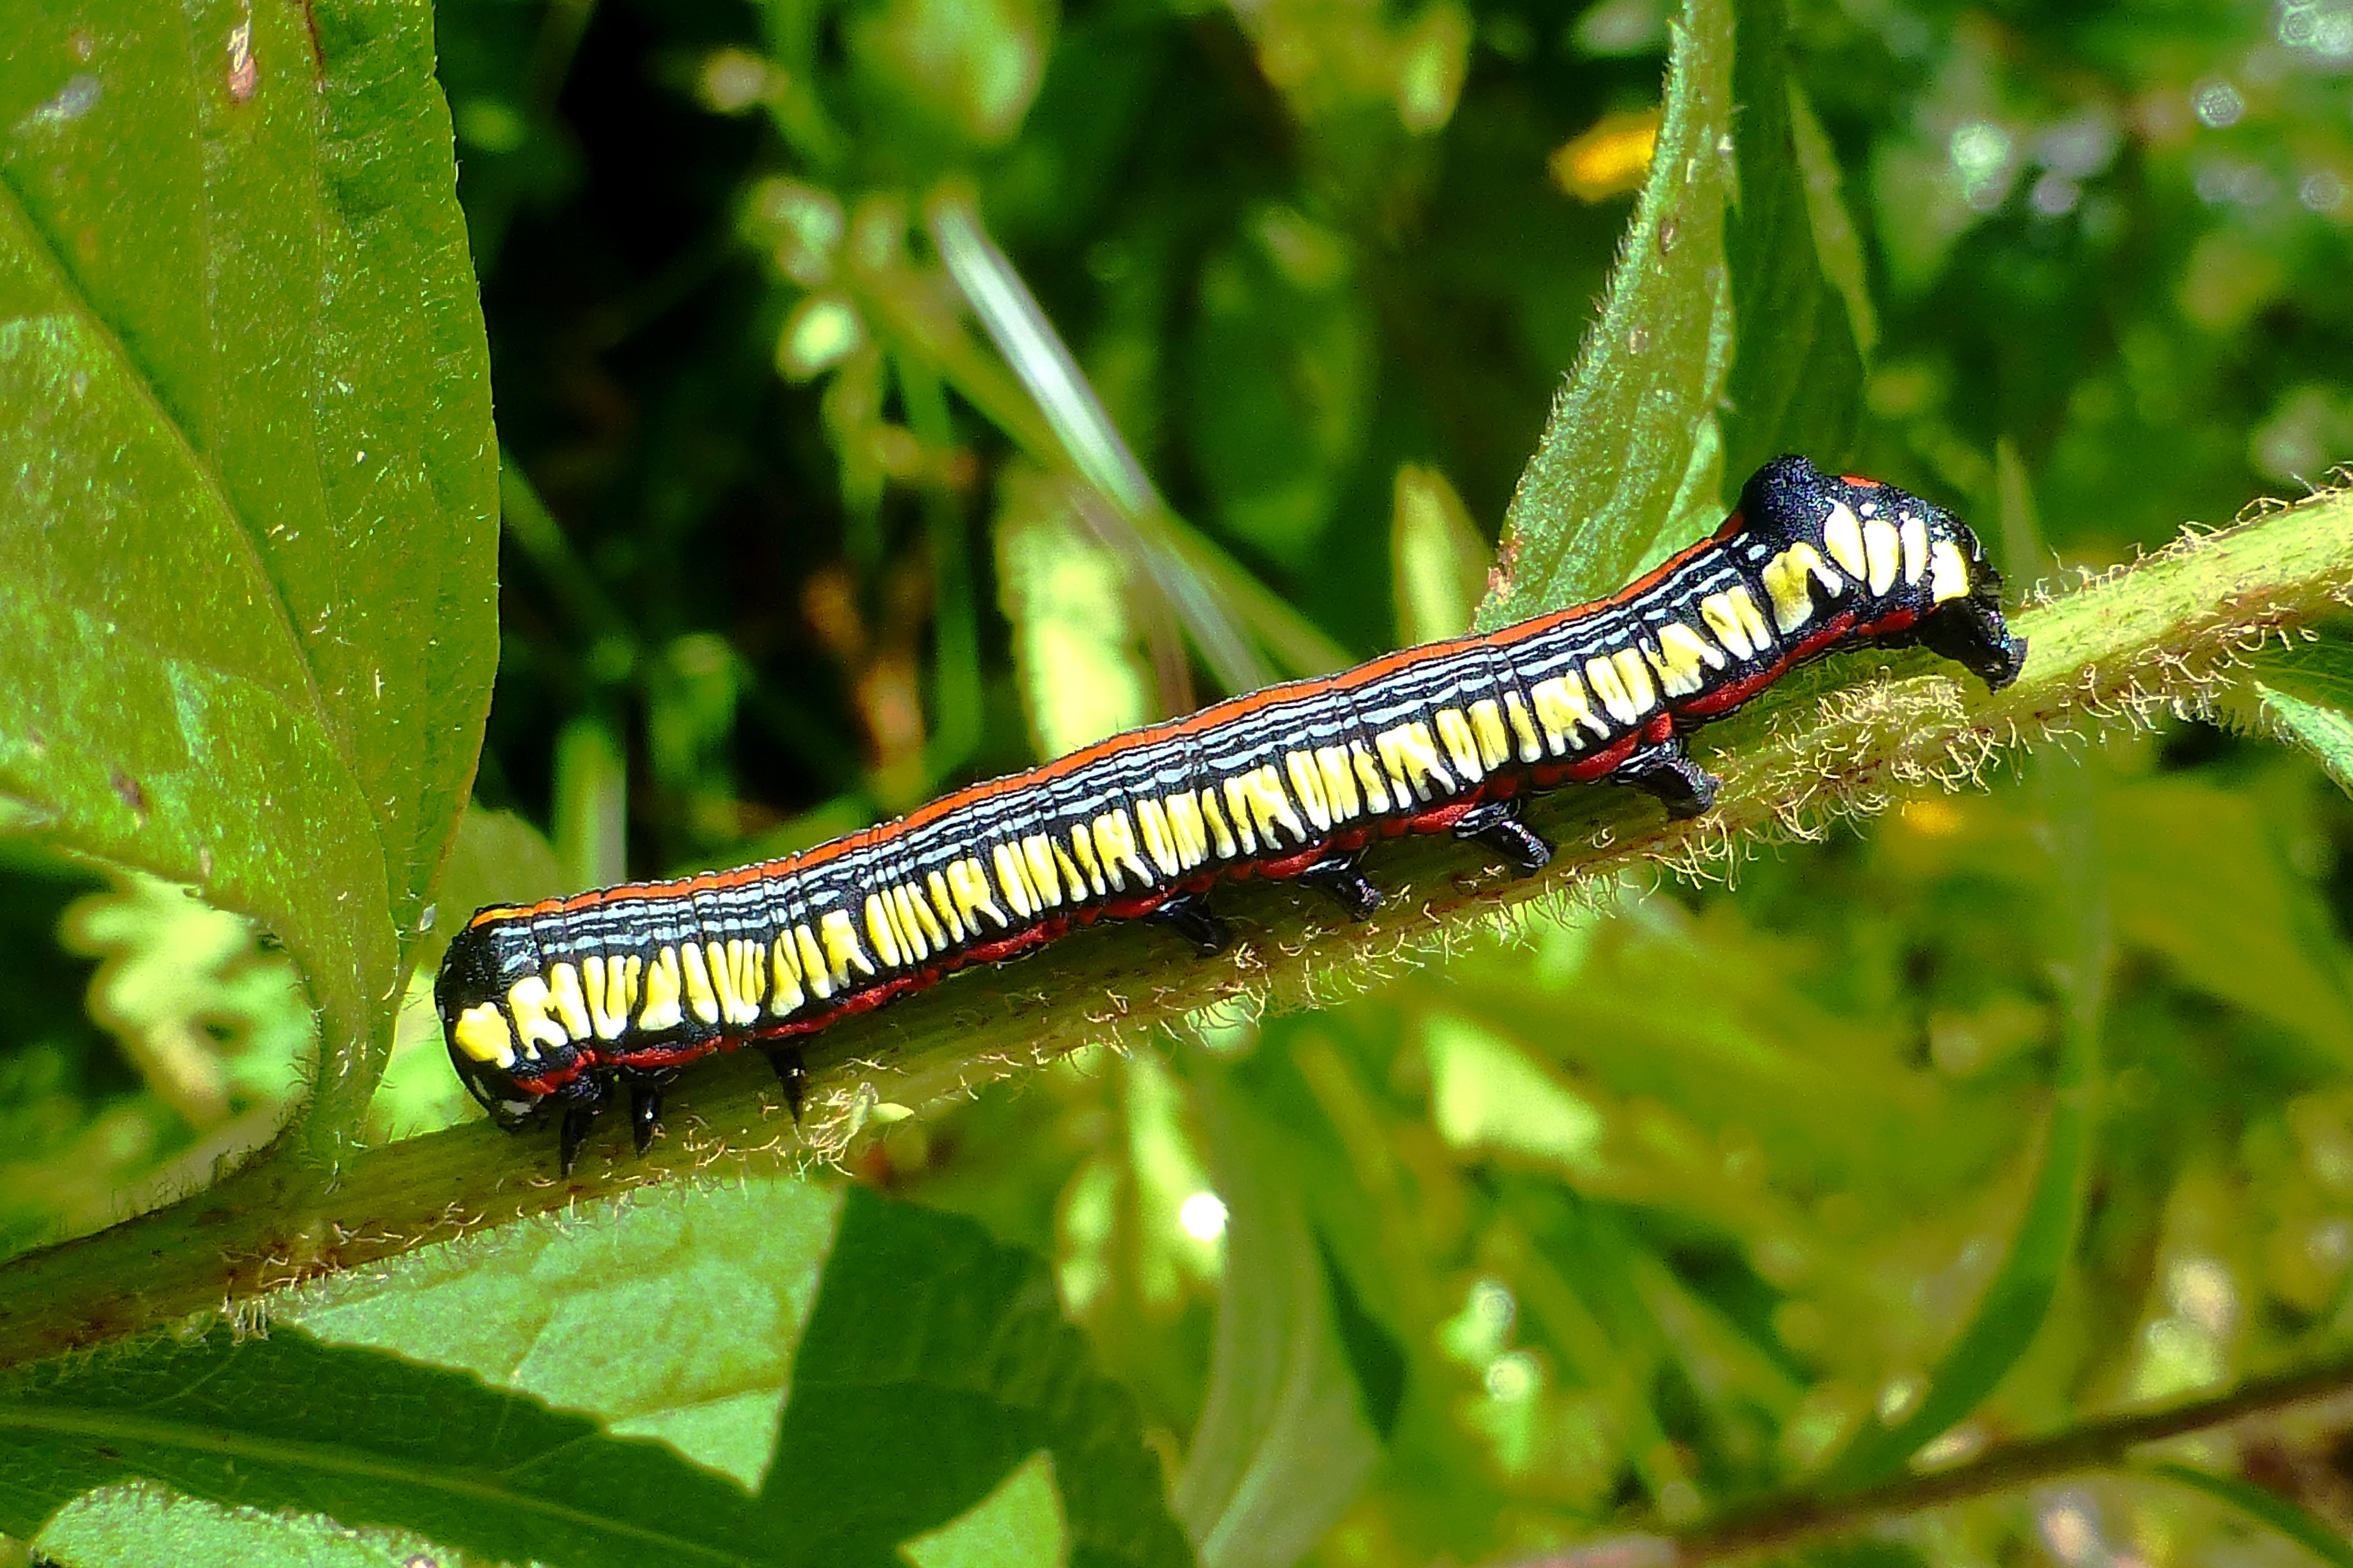 Asteroid caterpillar | Uconnladybug's Blog